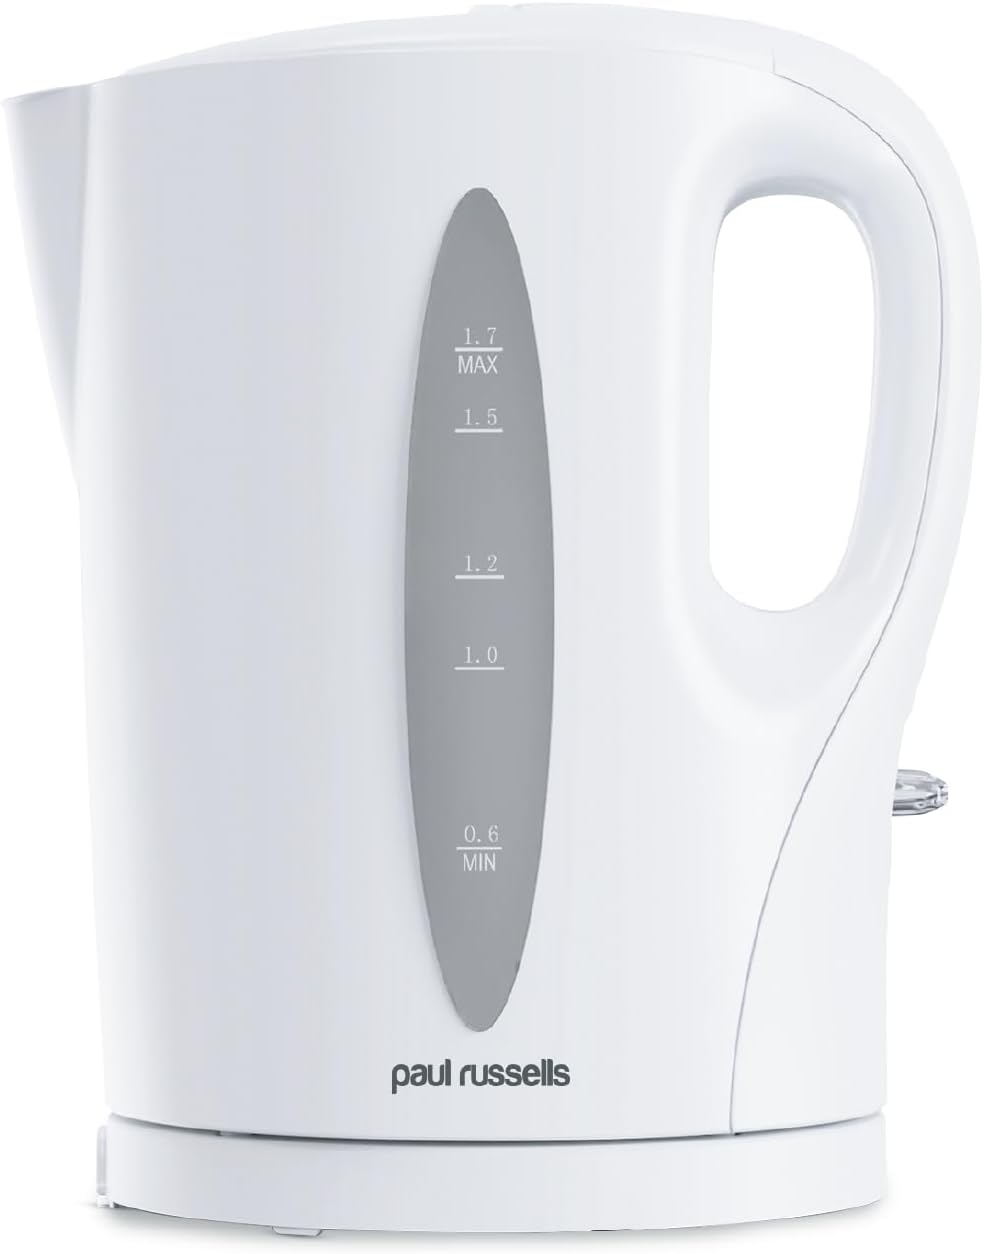 paul russells Electric Plastic Kettle, 2200W 1.7L, Hot water dispenser, Black Boil - Dry Protection, Auto Shut off Stirx Control - Amazing Gadgets Outlet